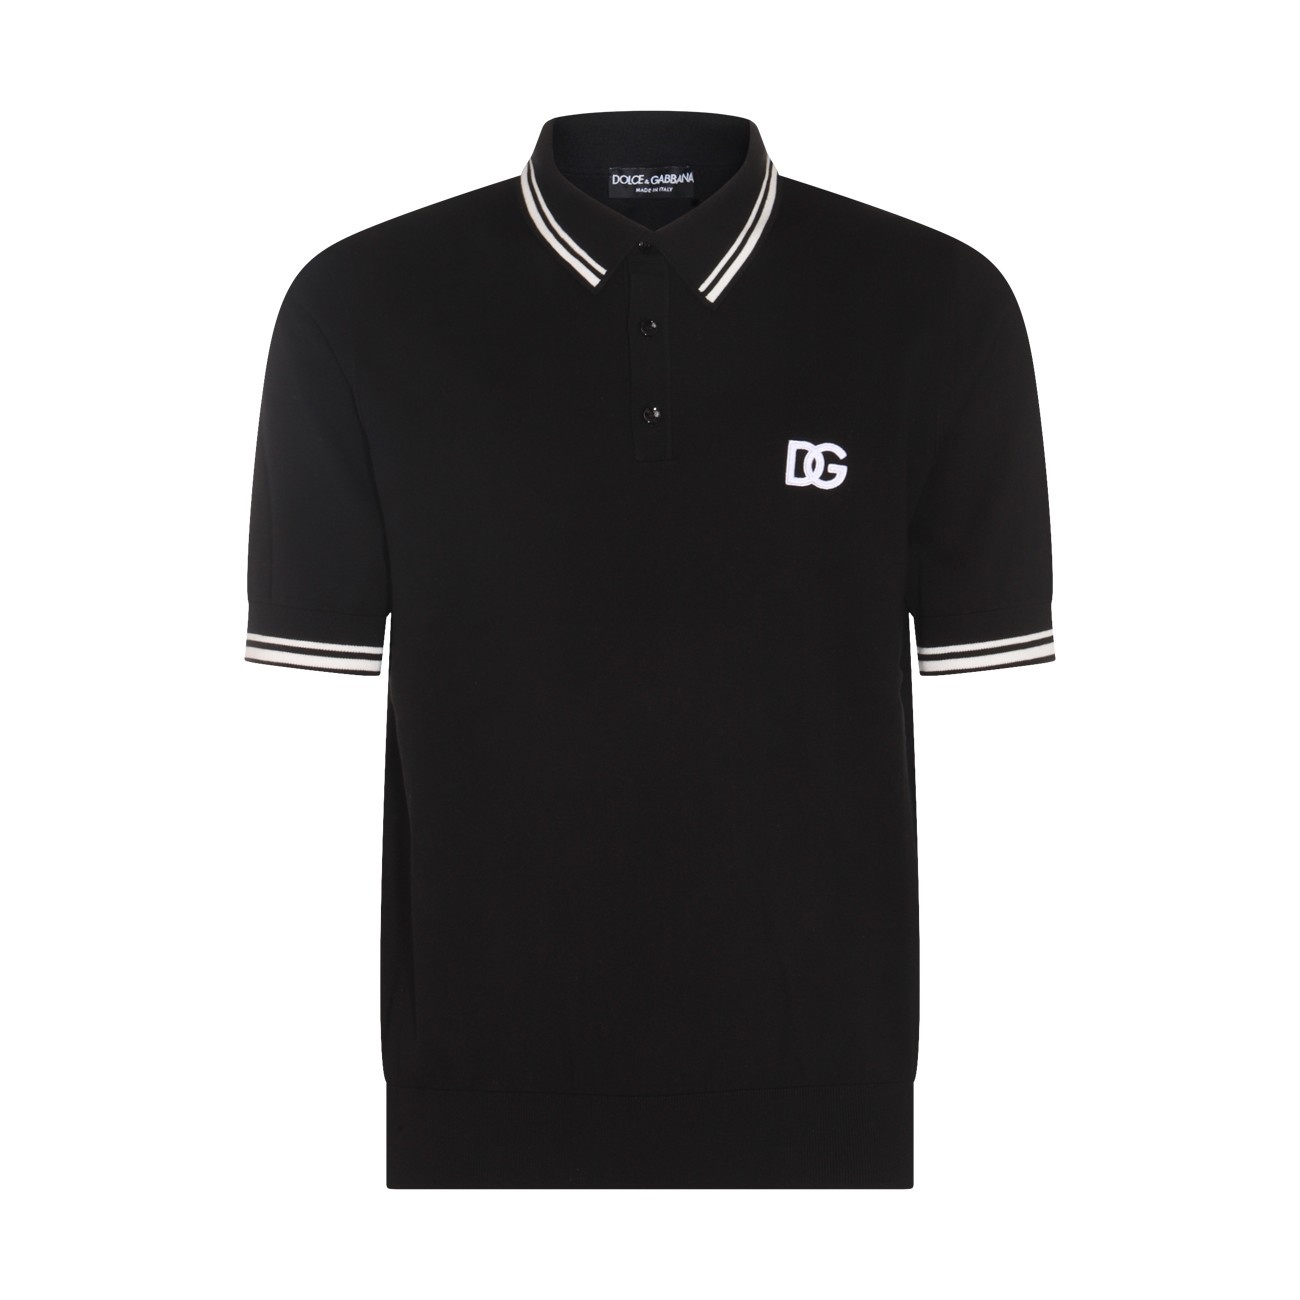 black and white cotton blend polo shirt - 1